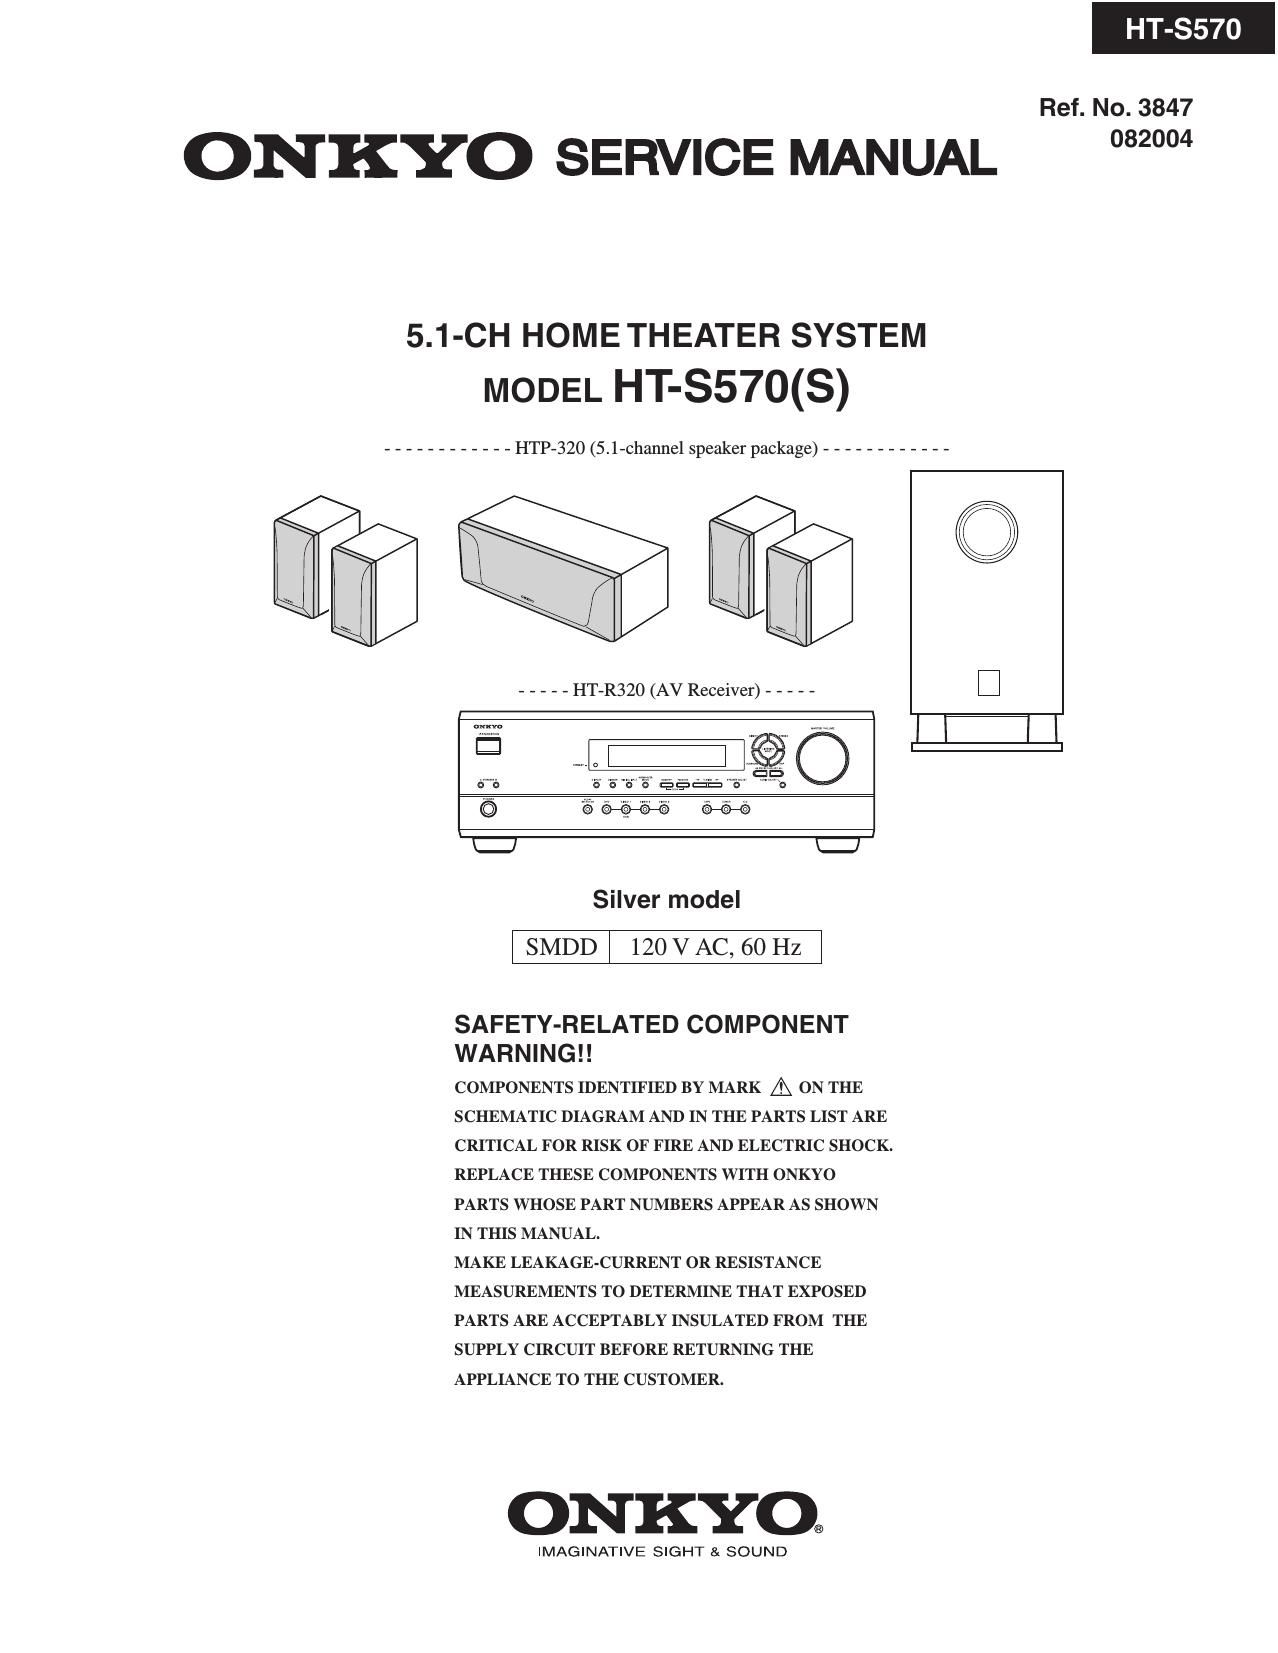 Onkyo HTS 570 S Service Manual